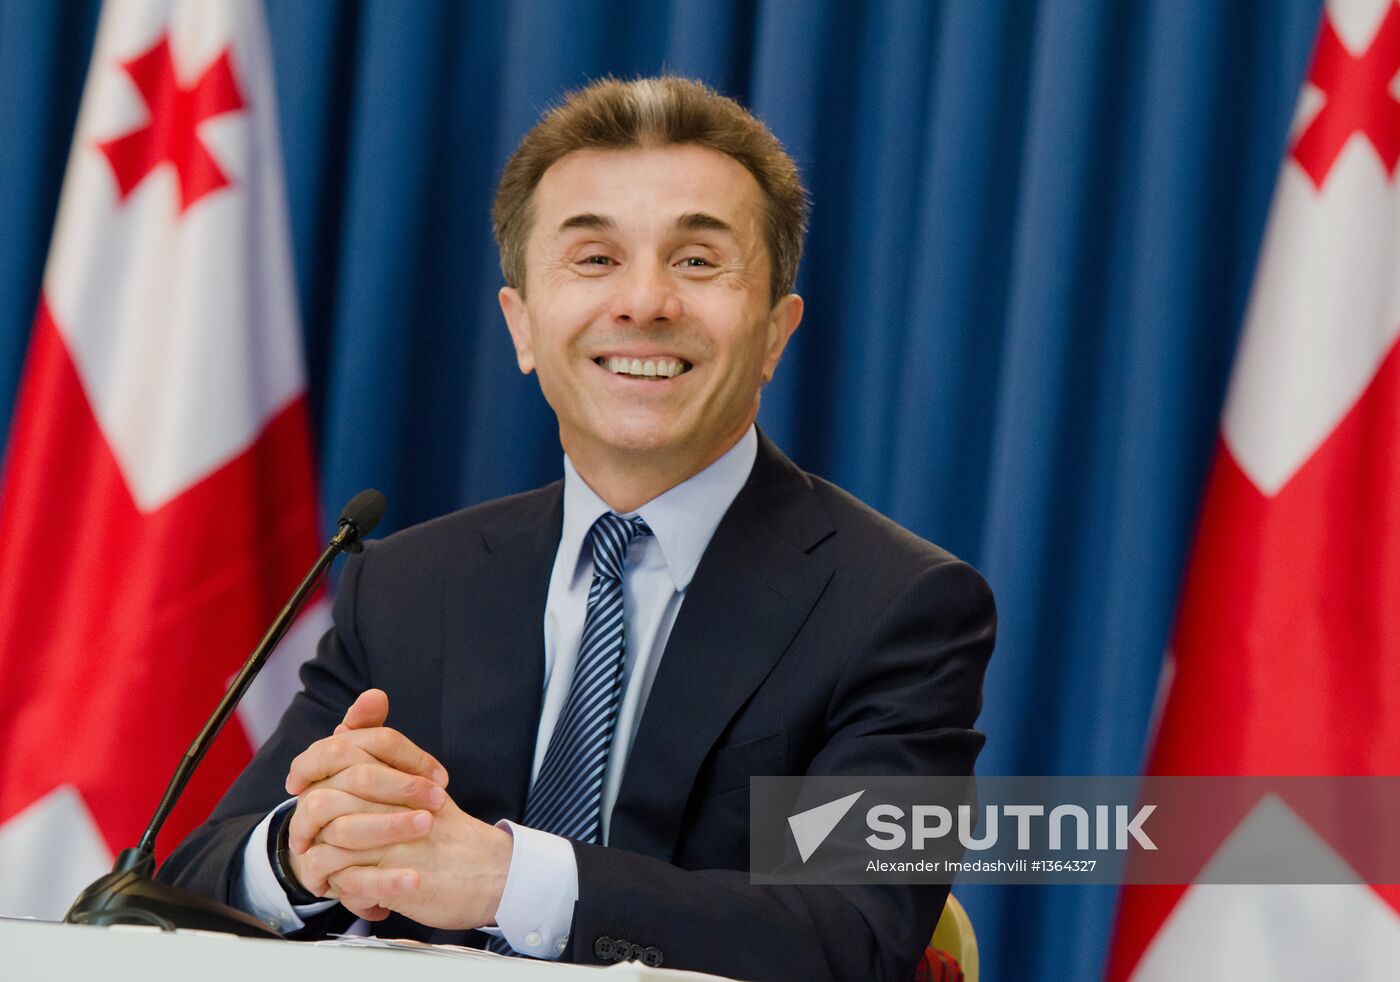 News conference with Prime Minister of Georgia B.Ivanishvili